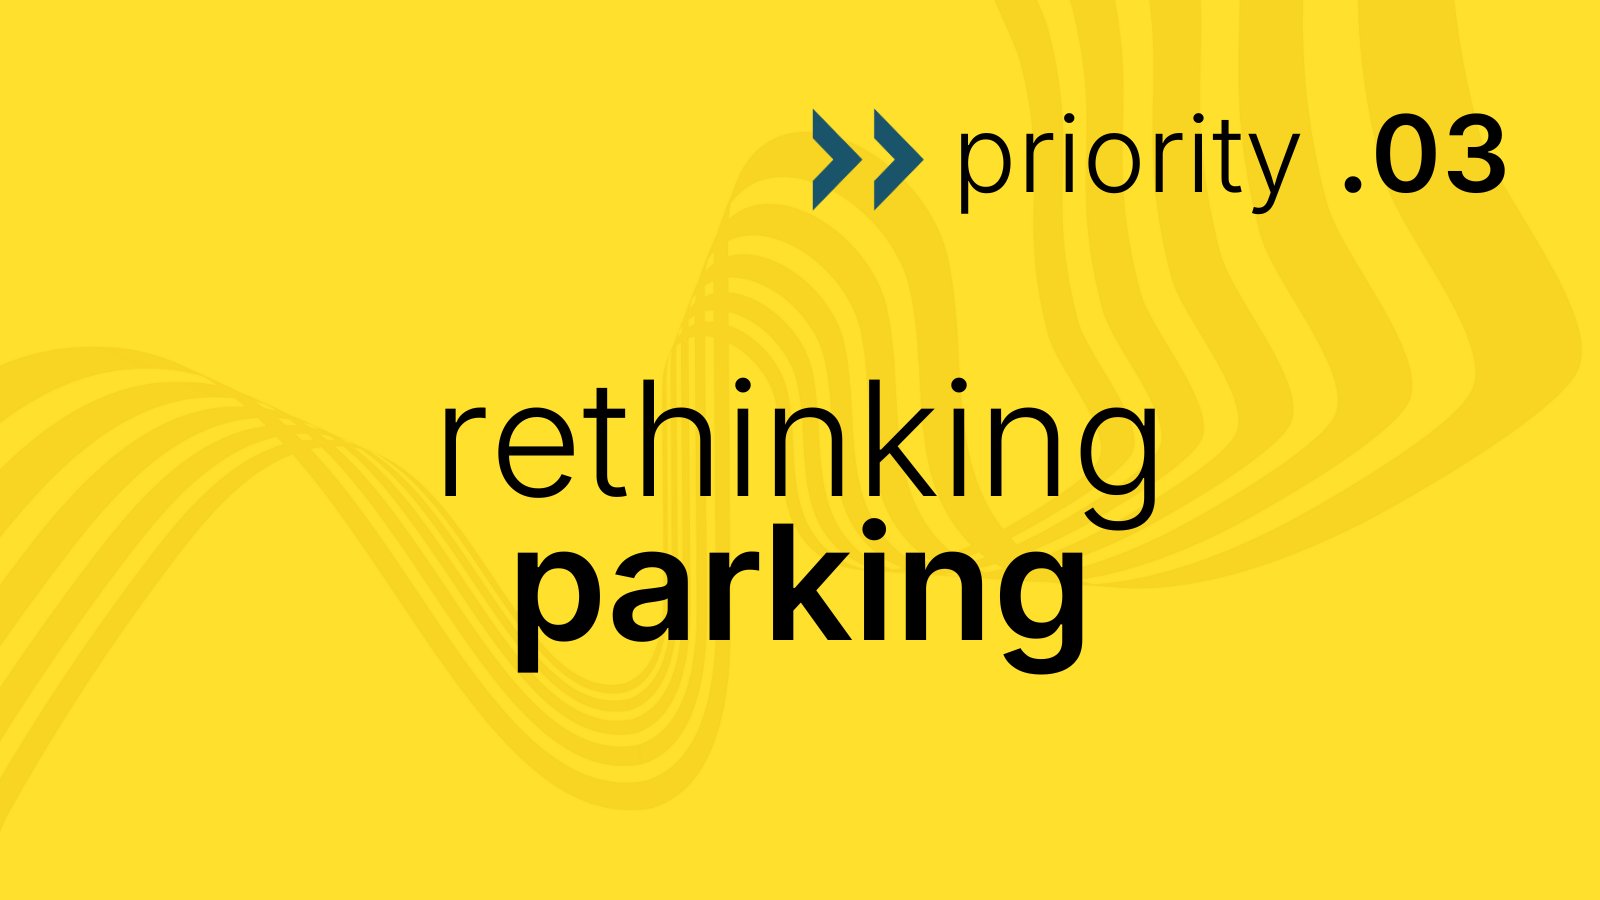 Priority 03: Rethinking Parking